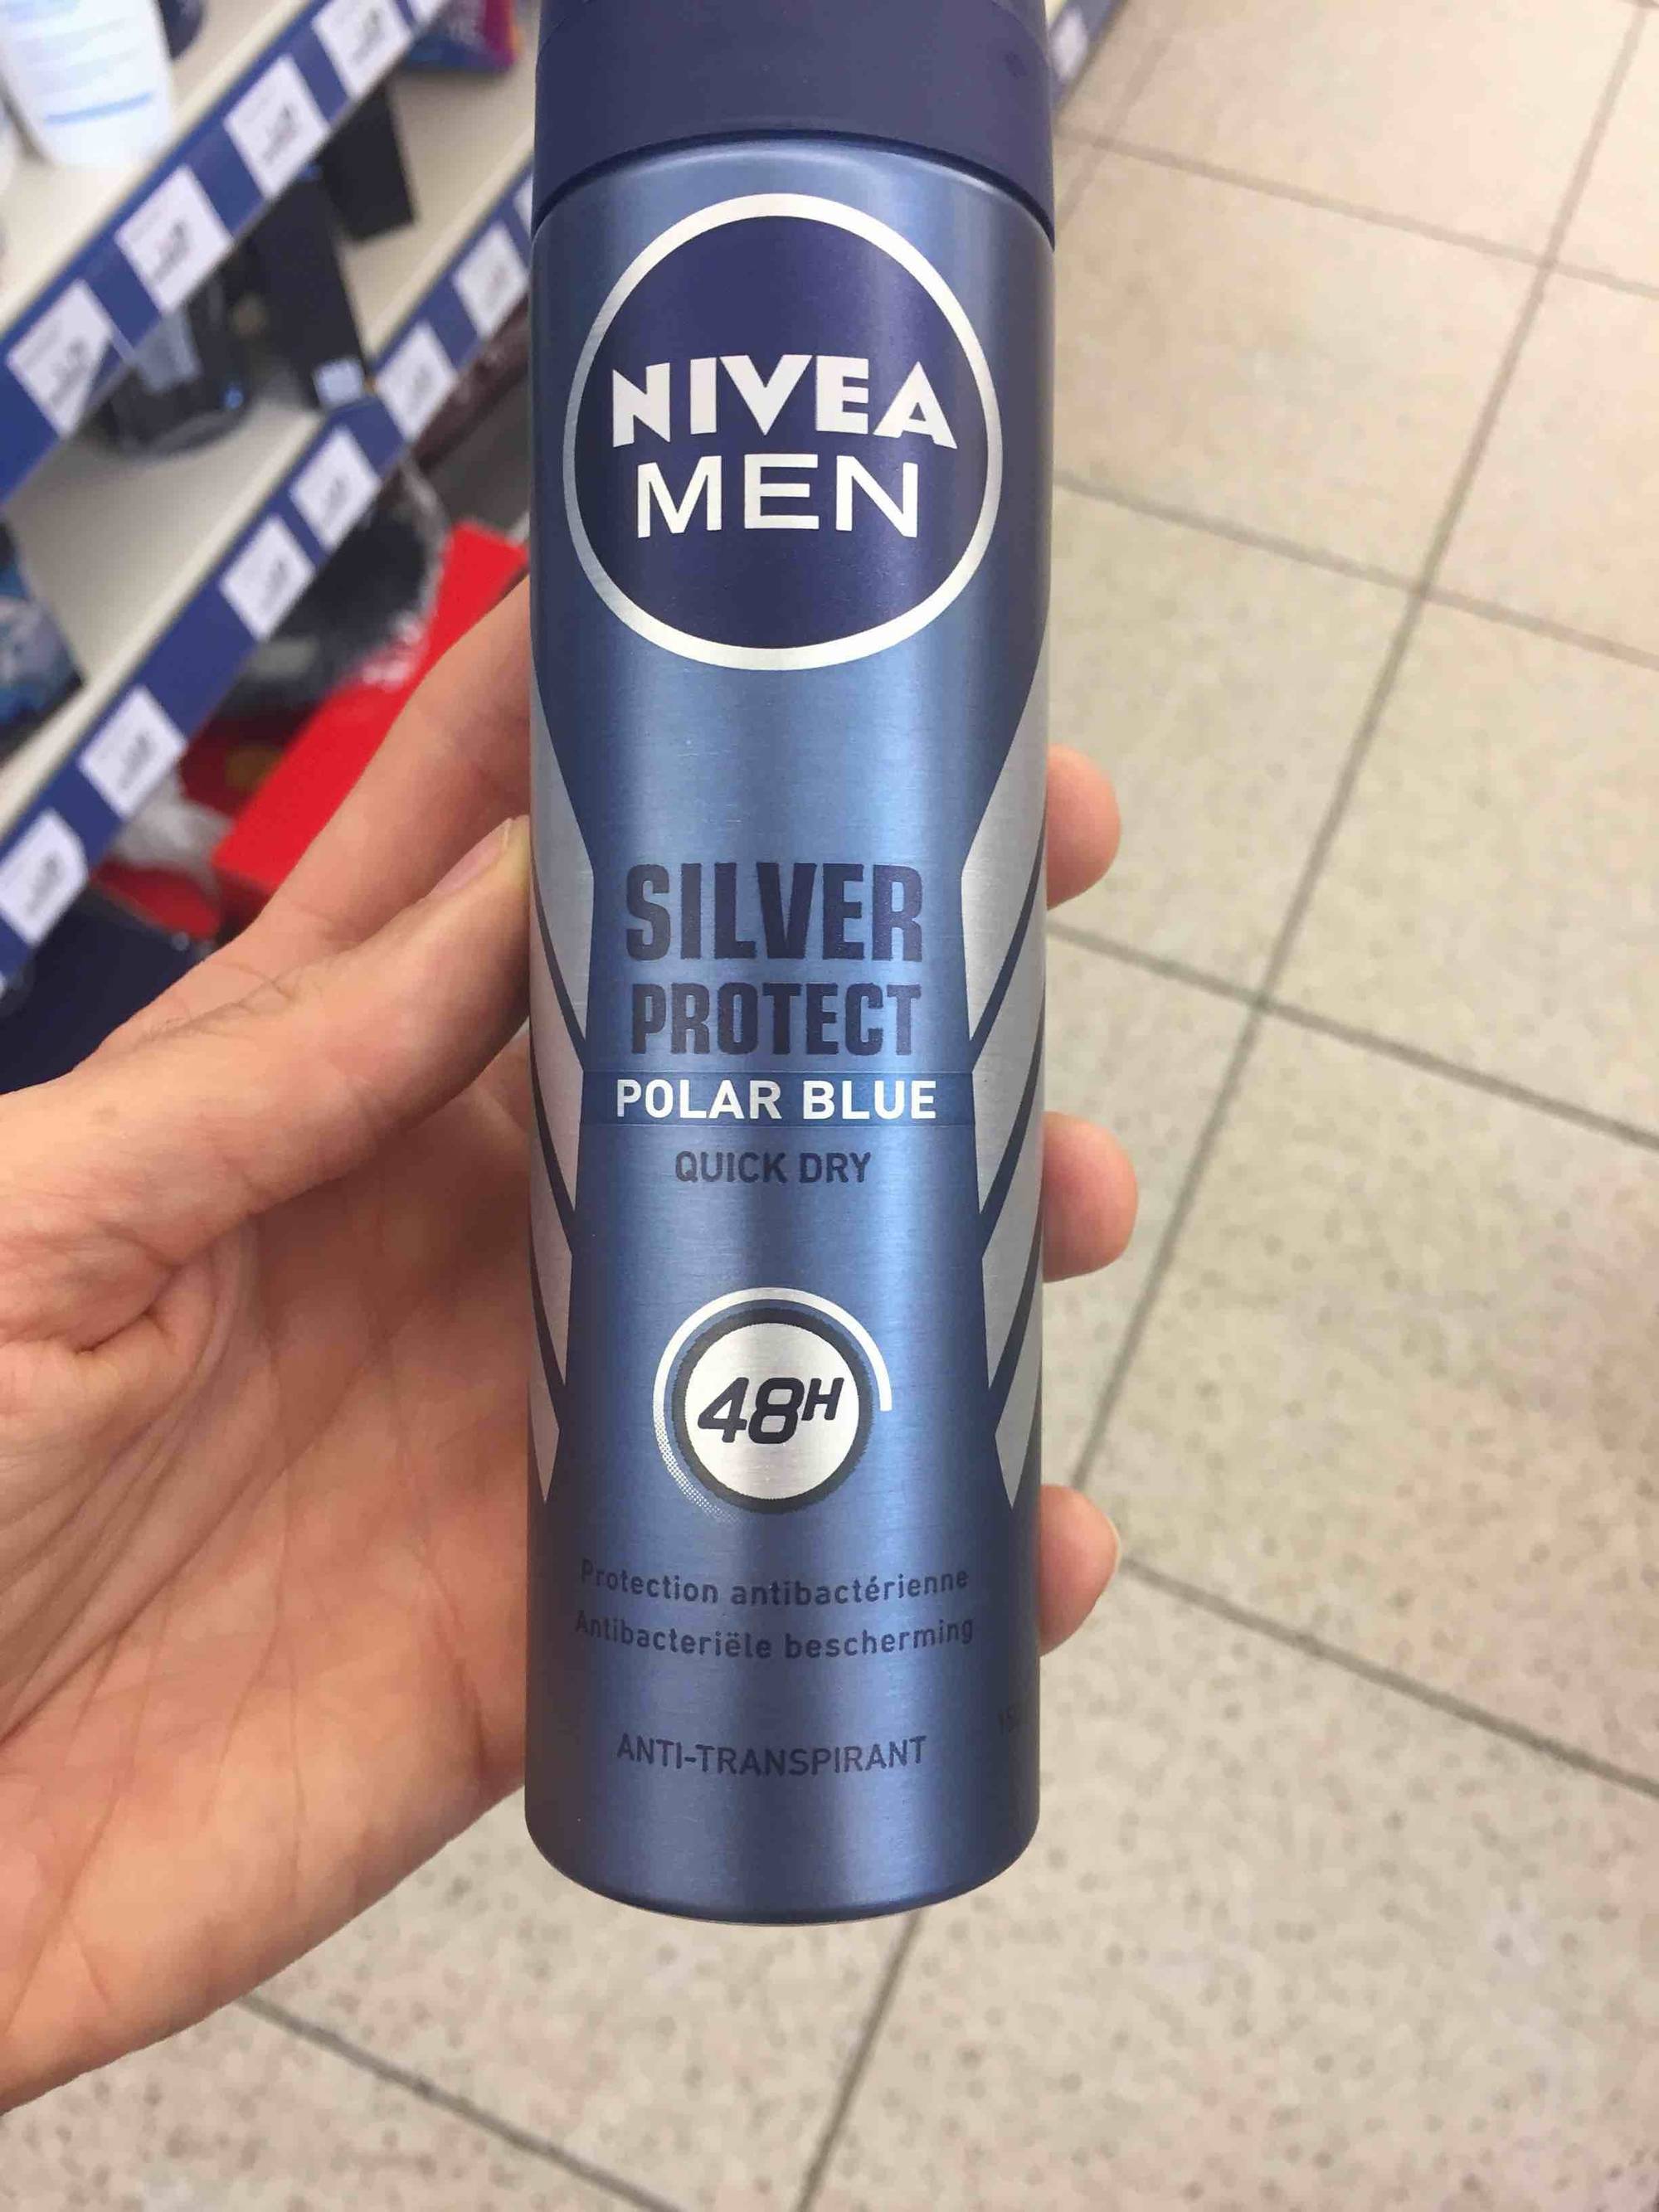 NIVEA MEN - Silver protect polar blue - Anti-transpirant 48h